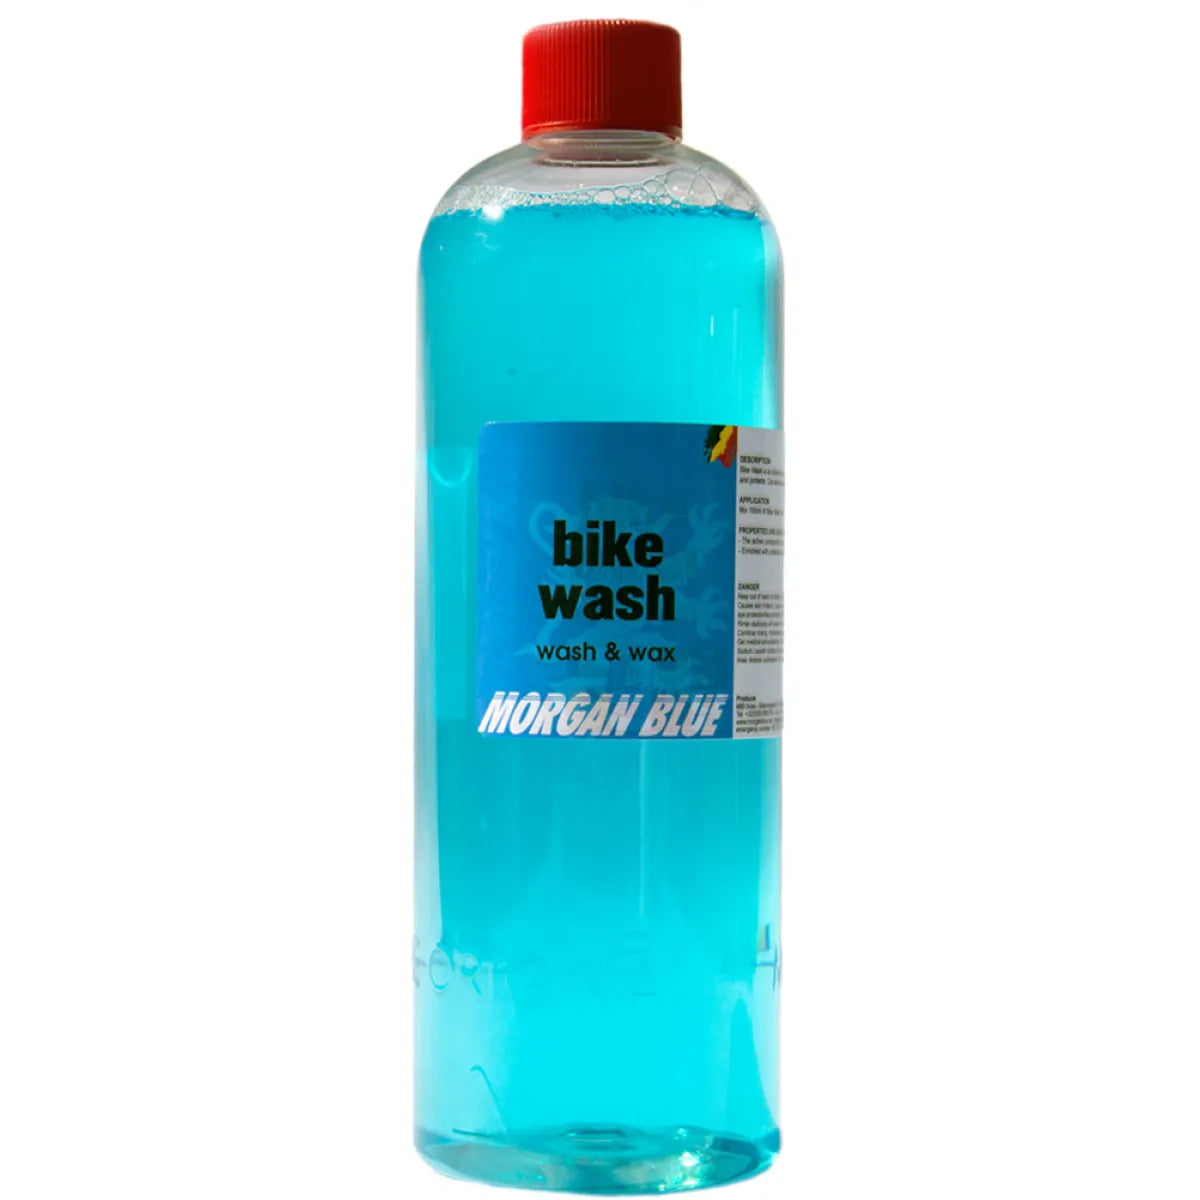 Dviračio valiklis Morgan Blue Bike Wash 1000ml